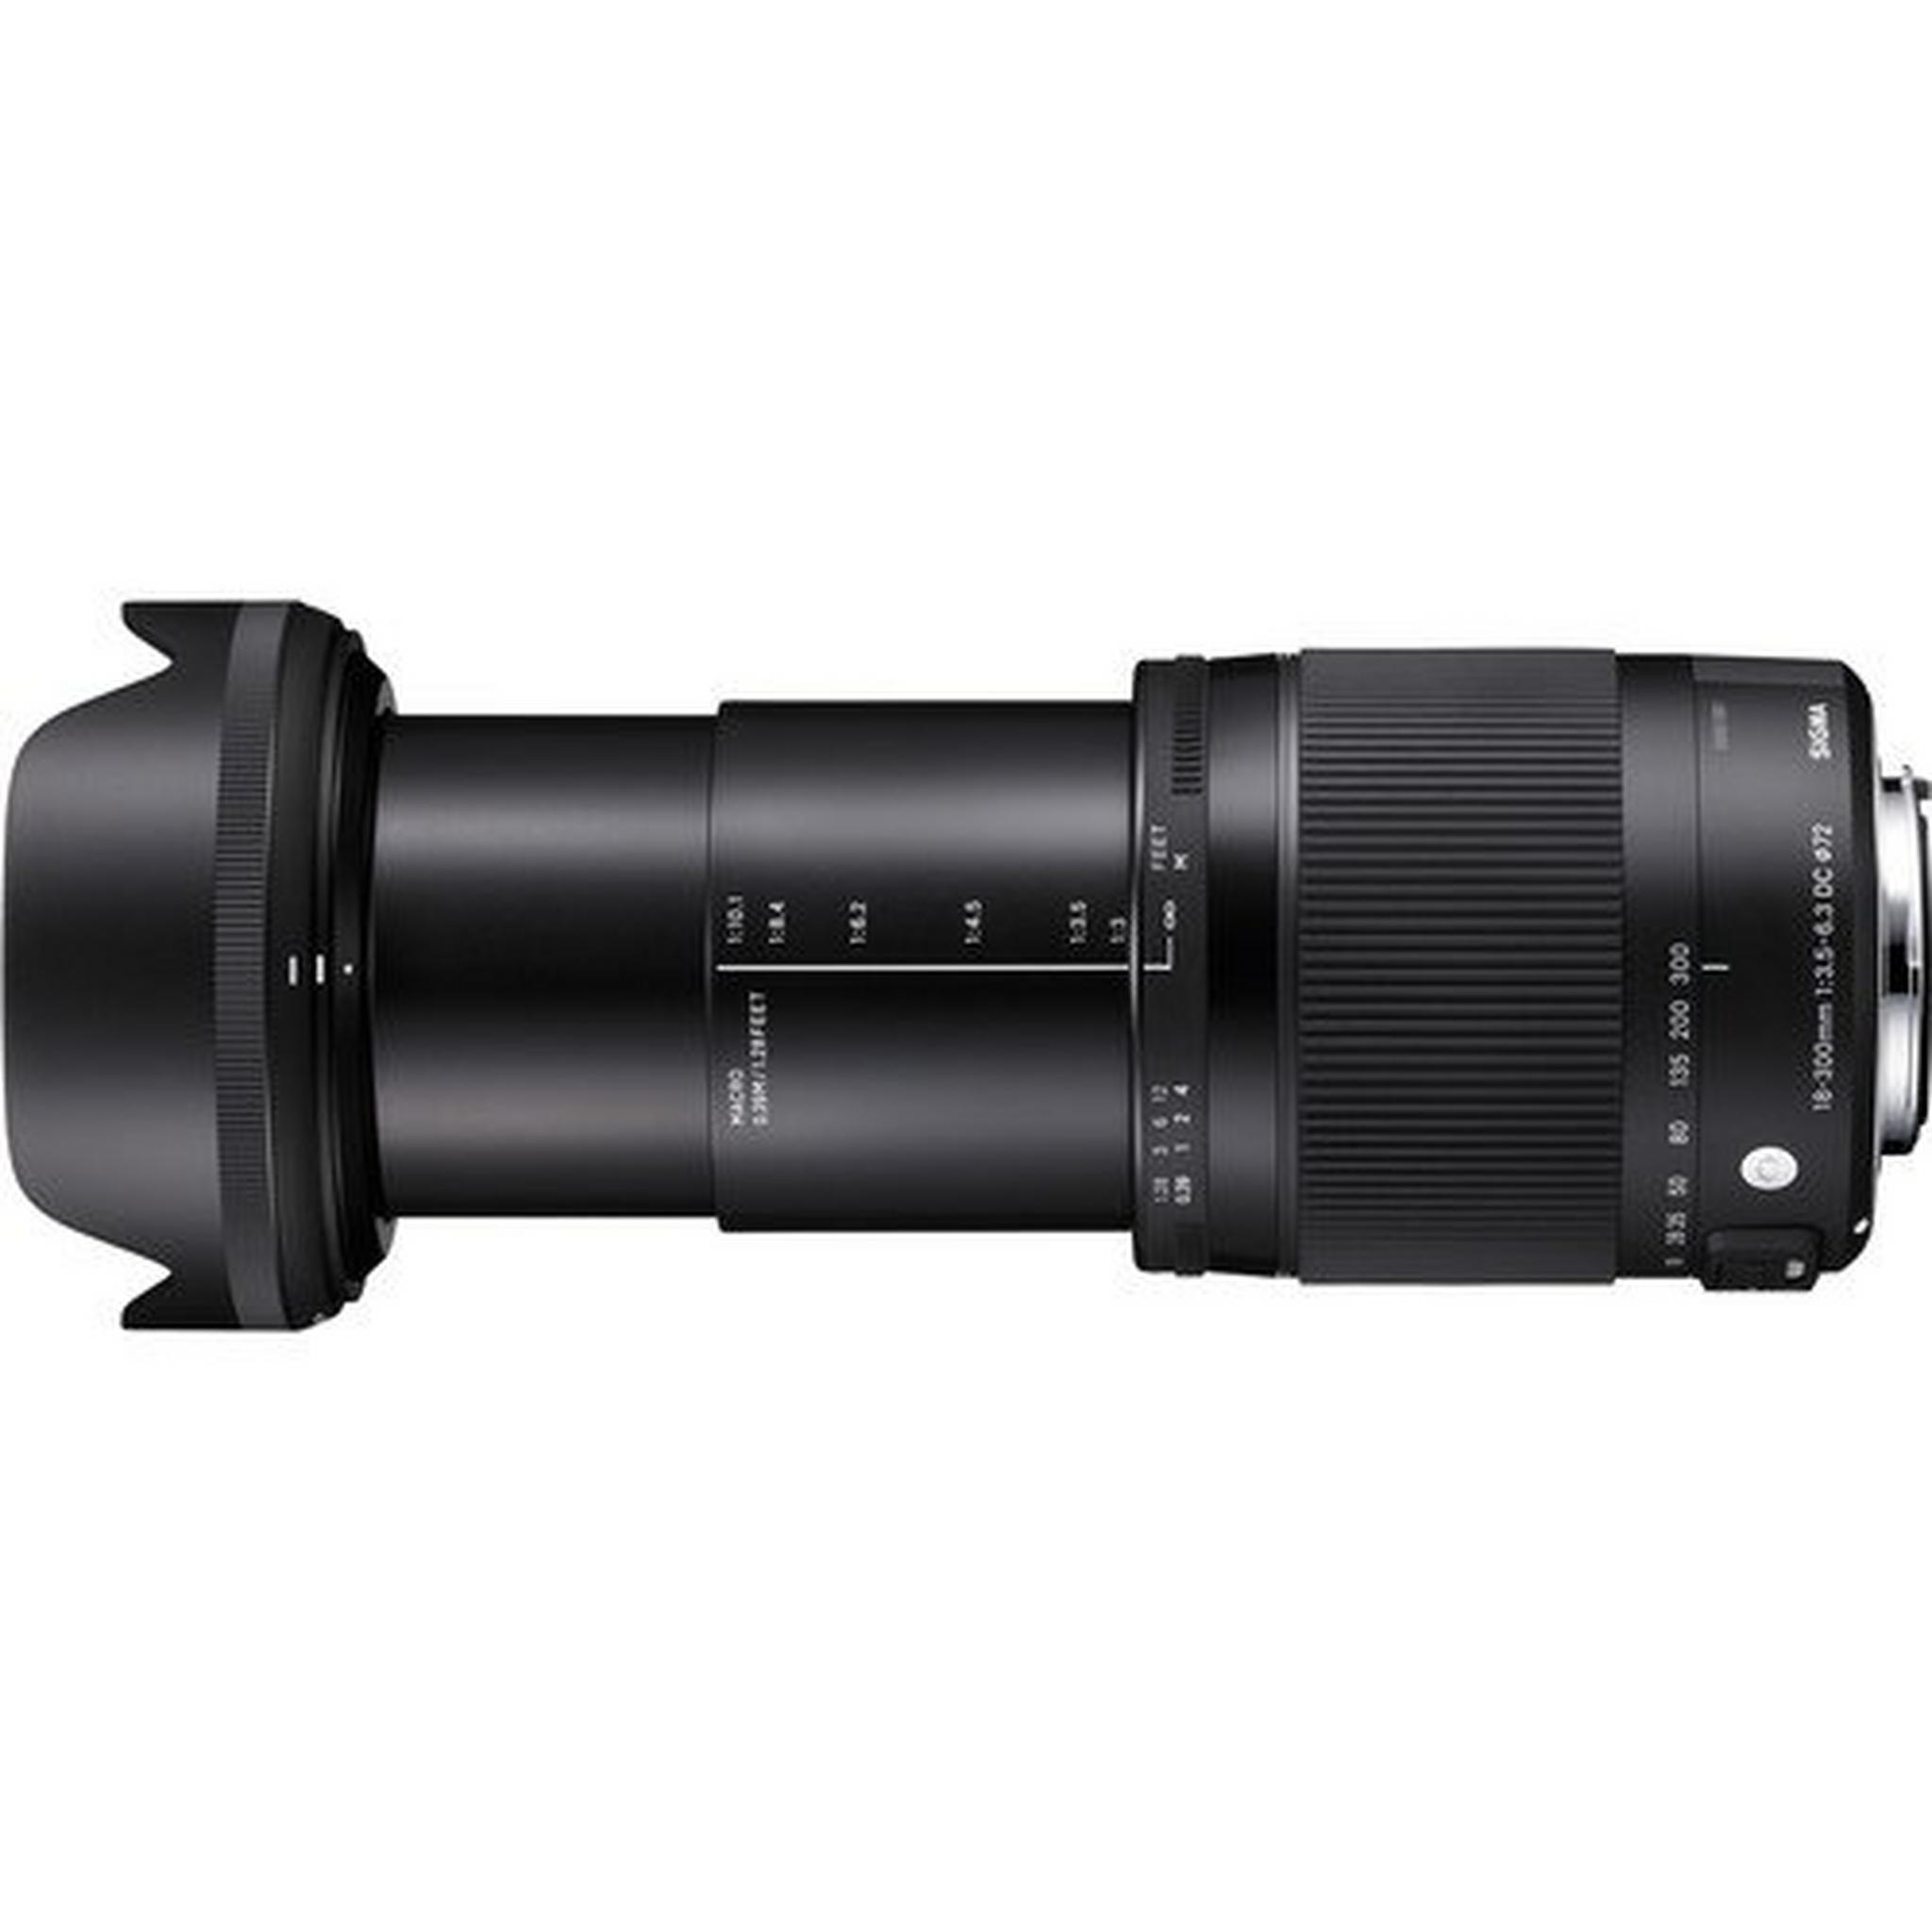 Sigma 18-300mm F3.5-6.3 DC Macro OS HSM Lens - Canon Mount